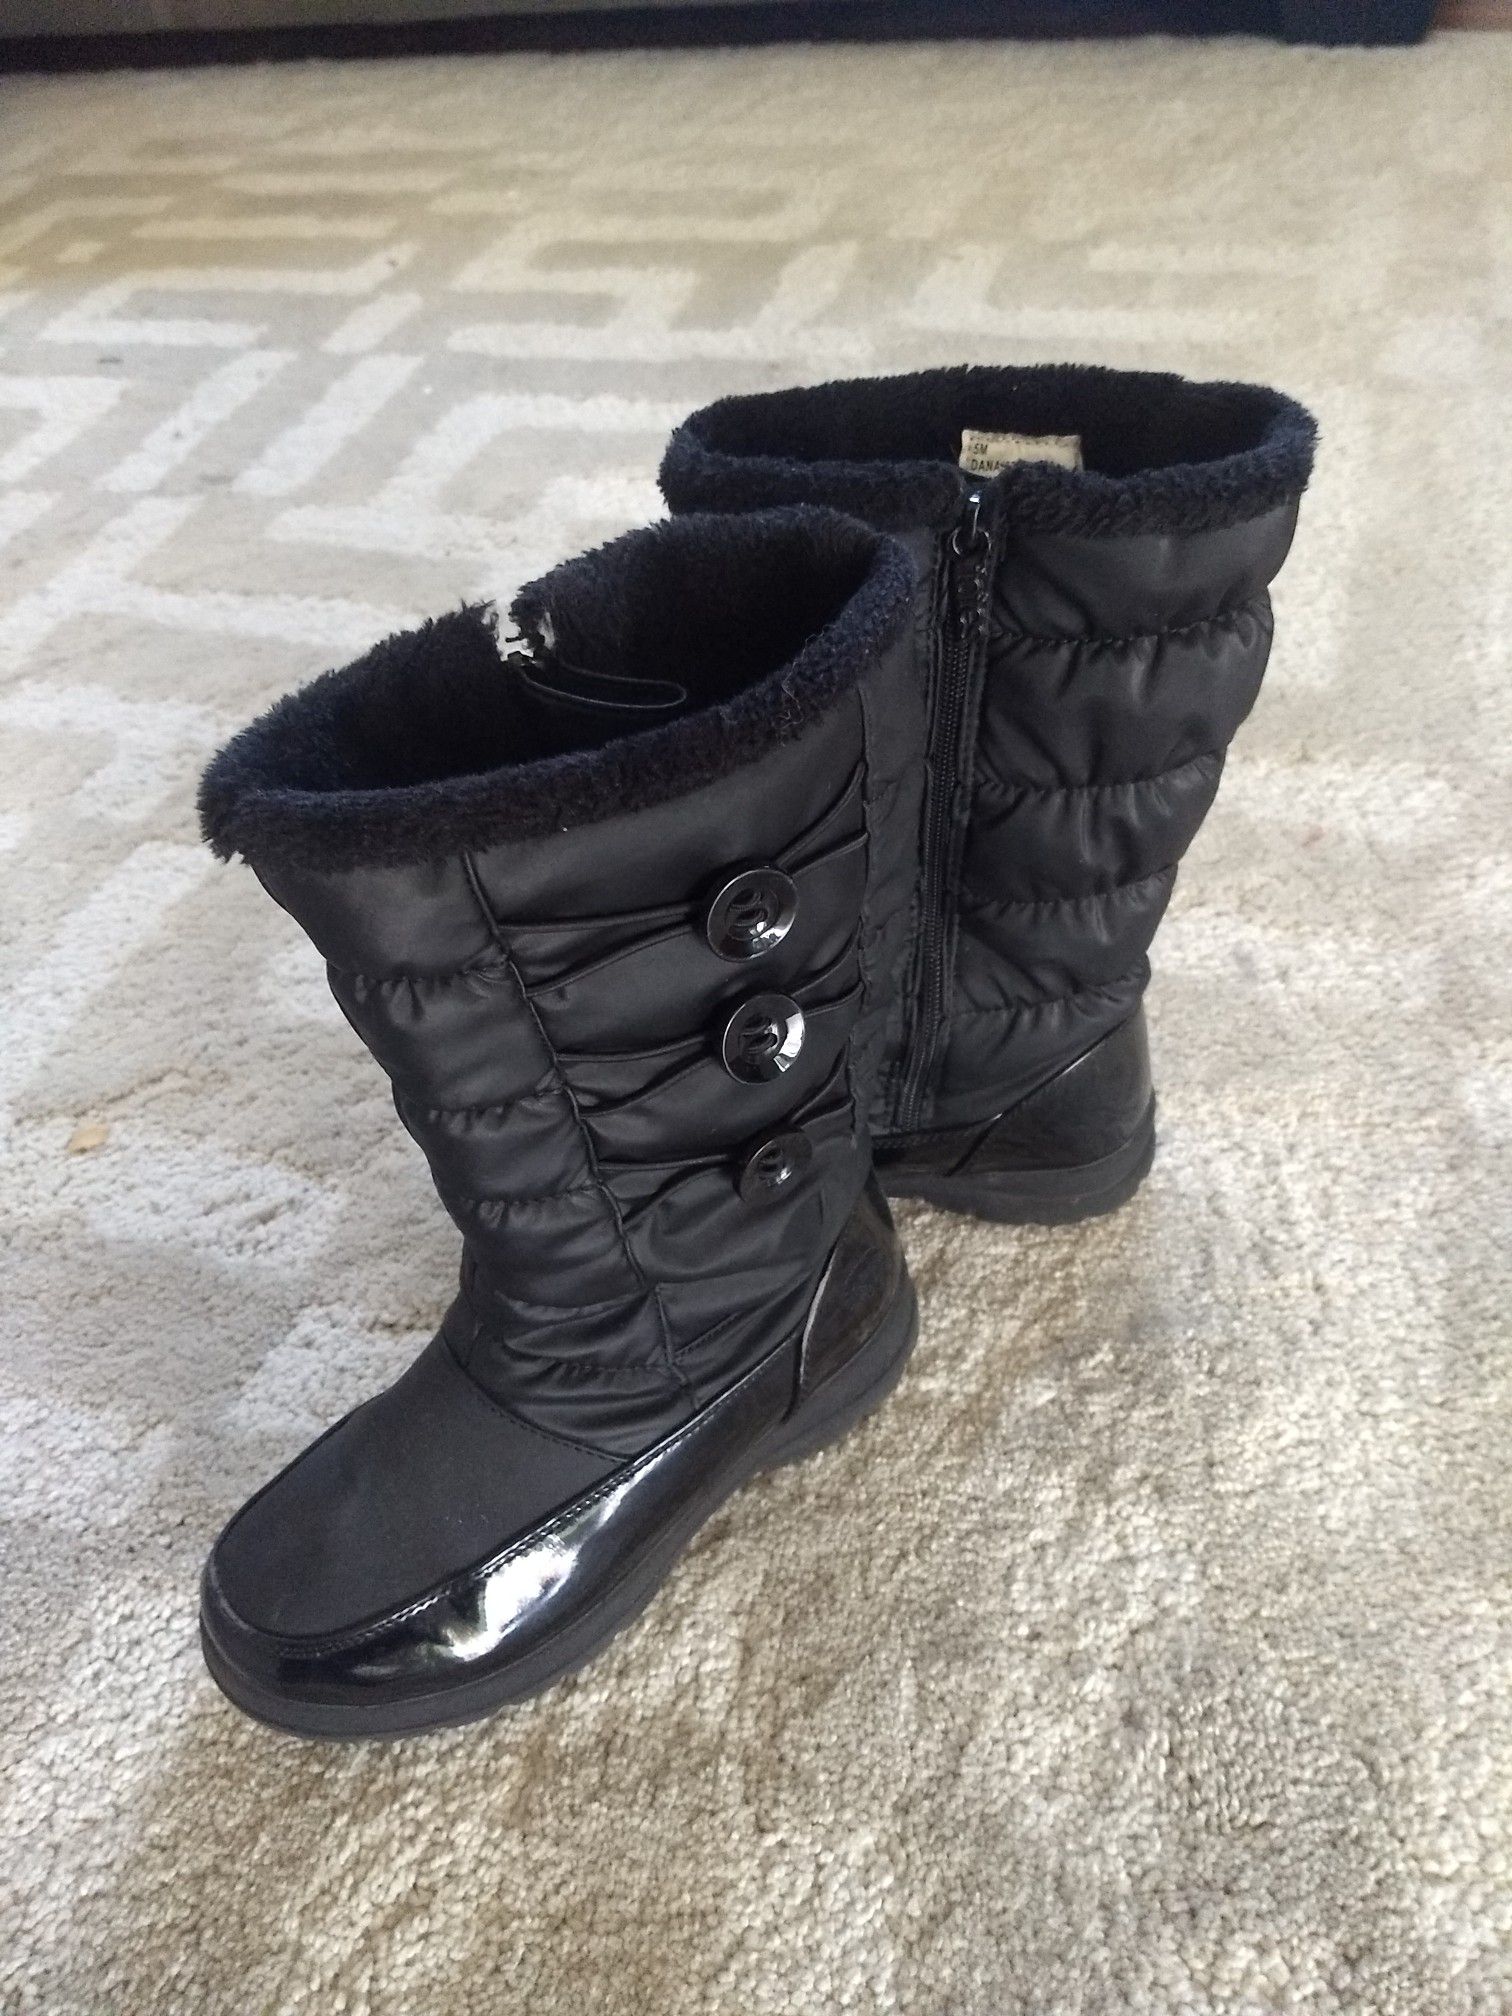 Totes rain / snow boots size 5